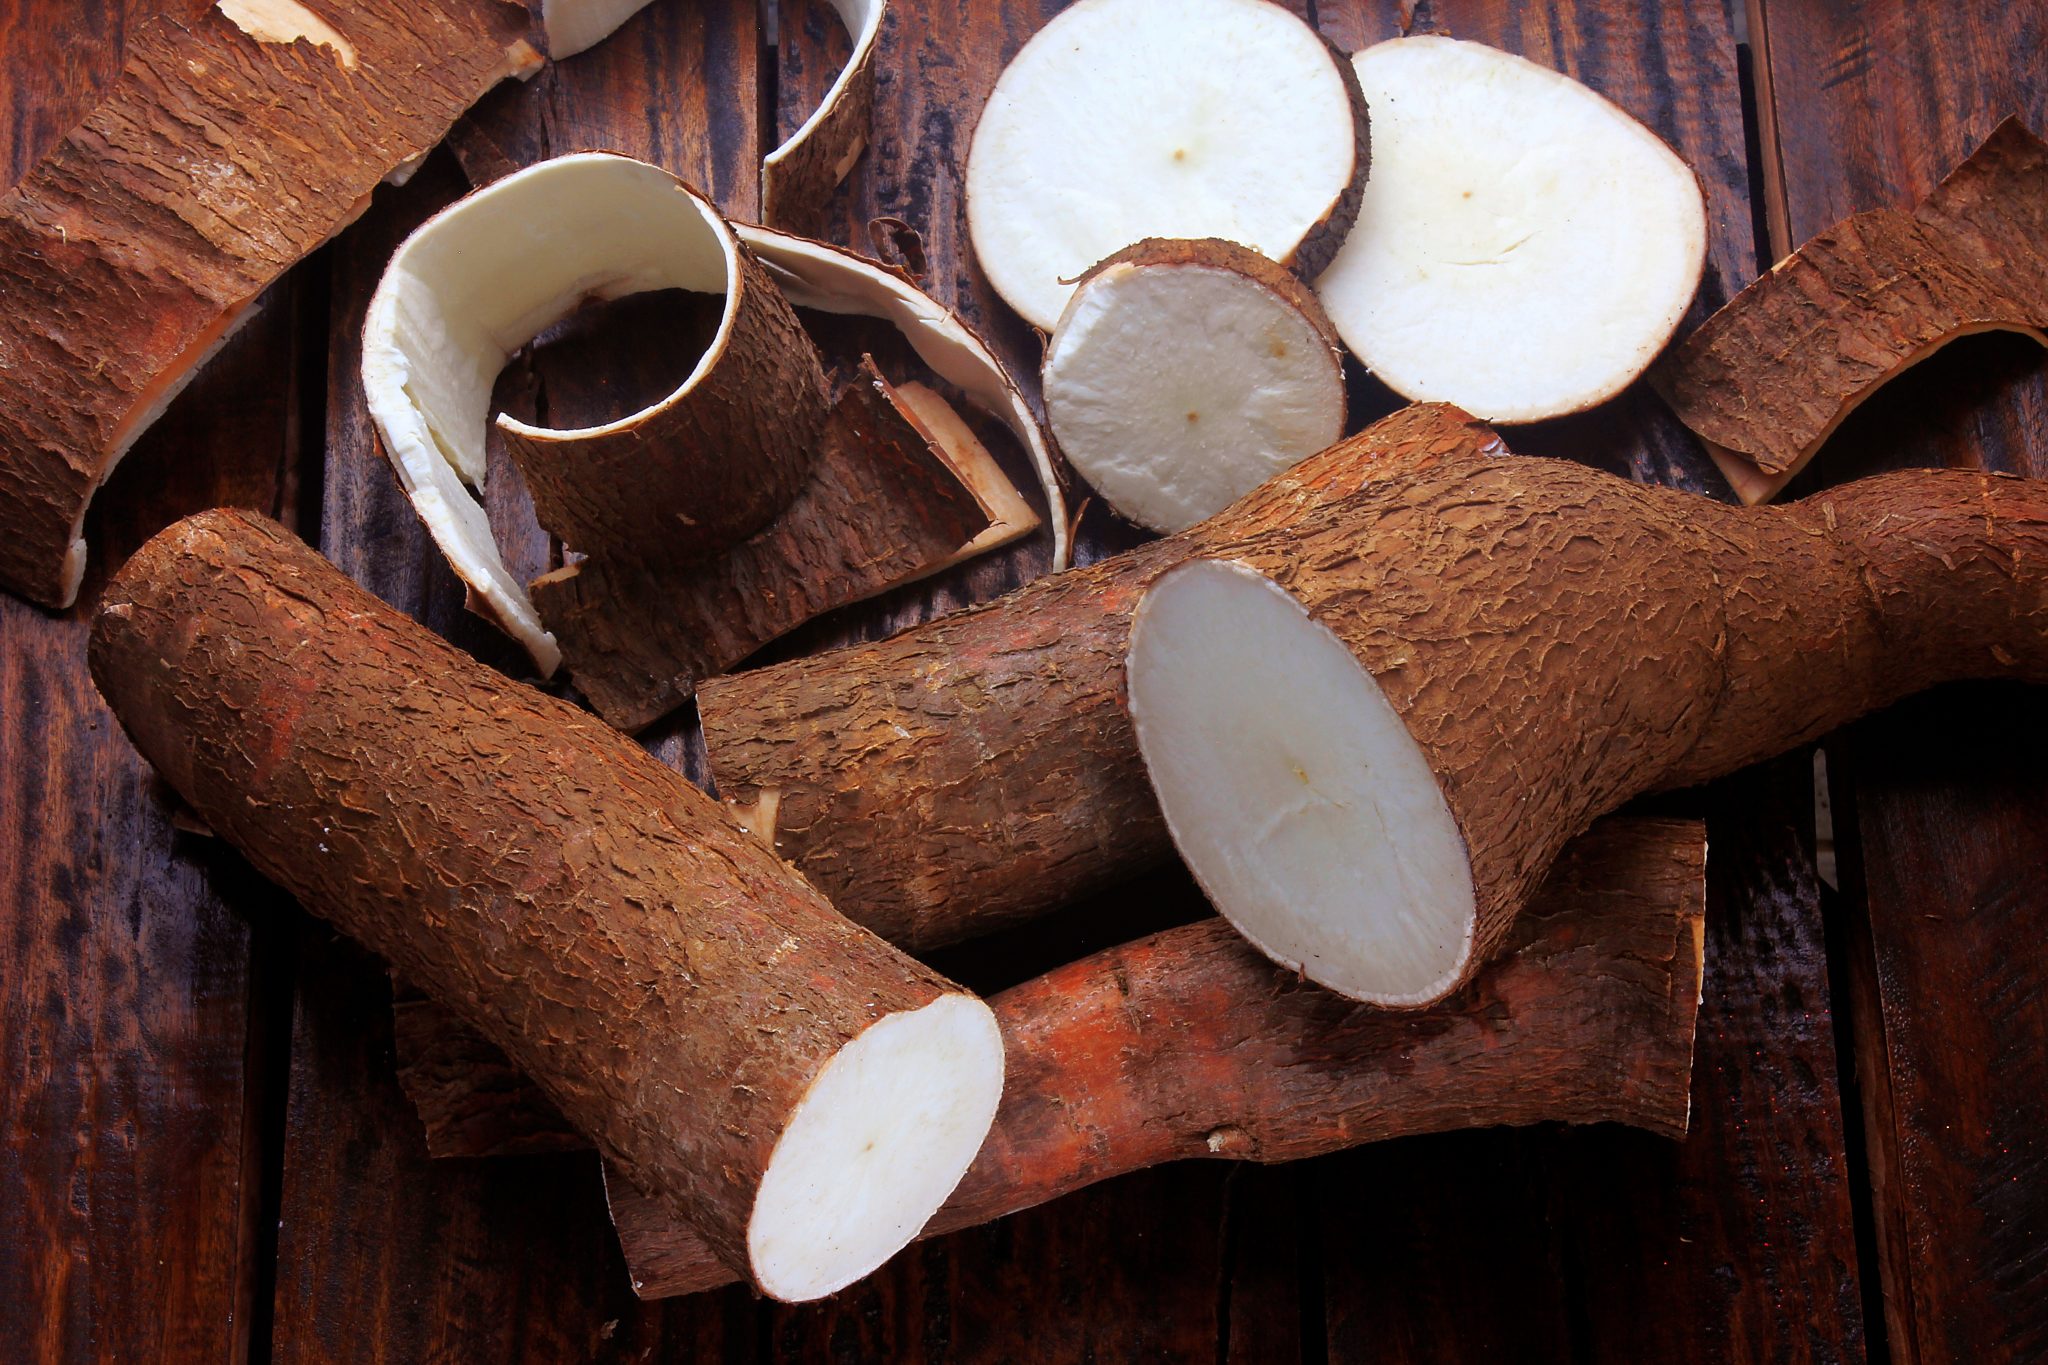 Health benefits of cassava - Dr. Pingel